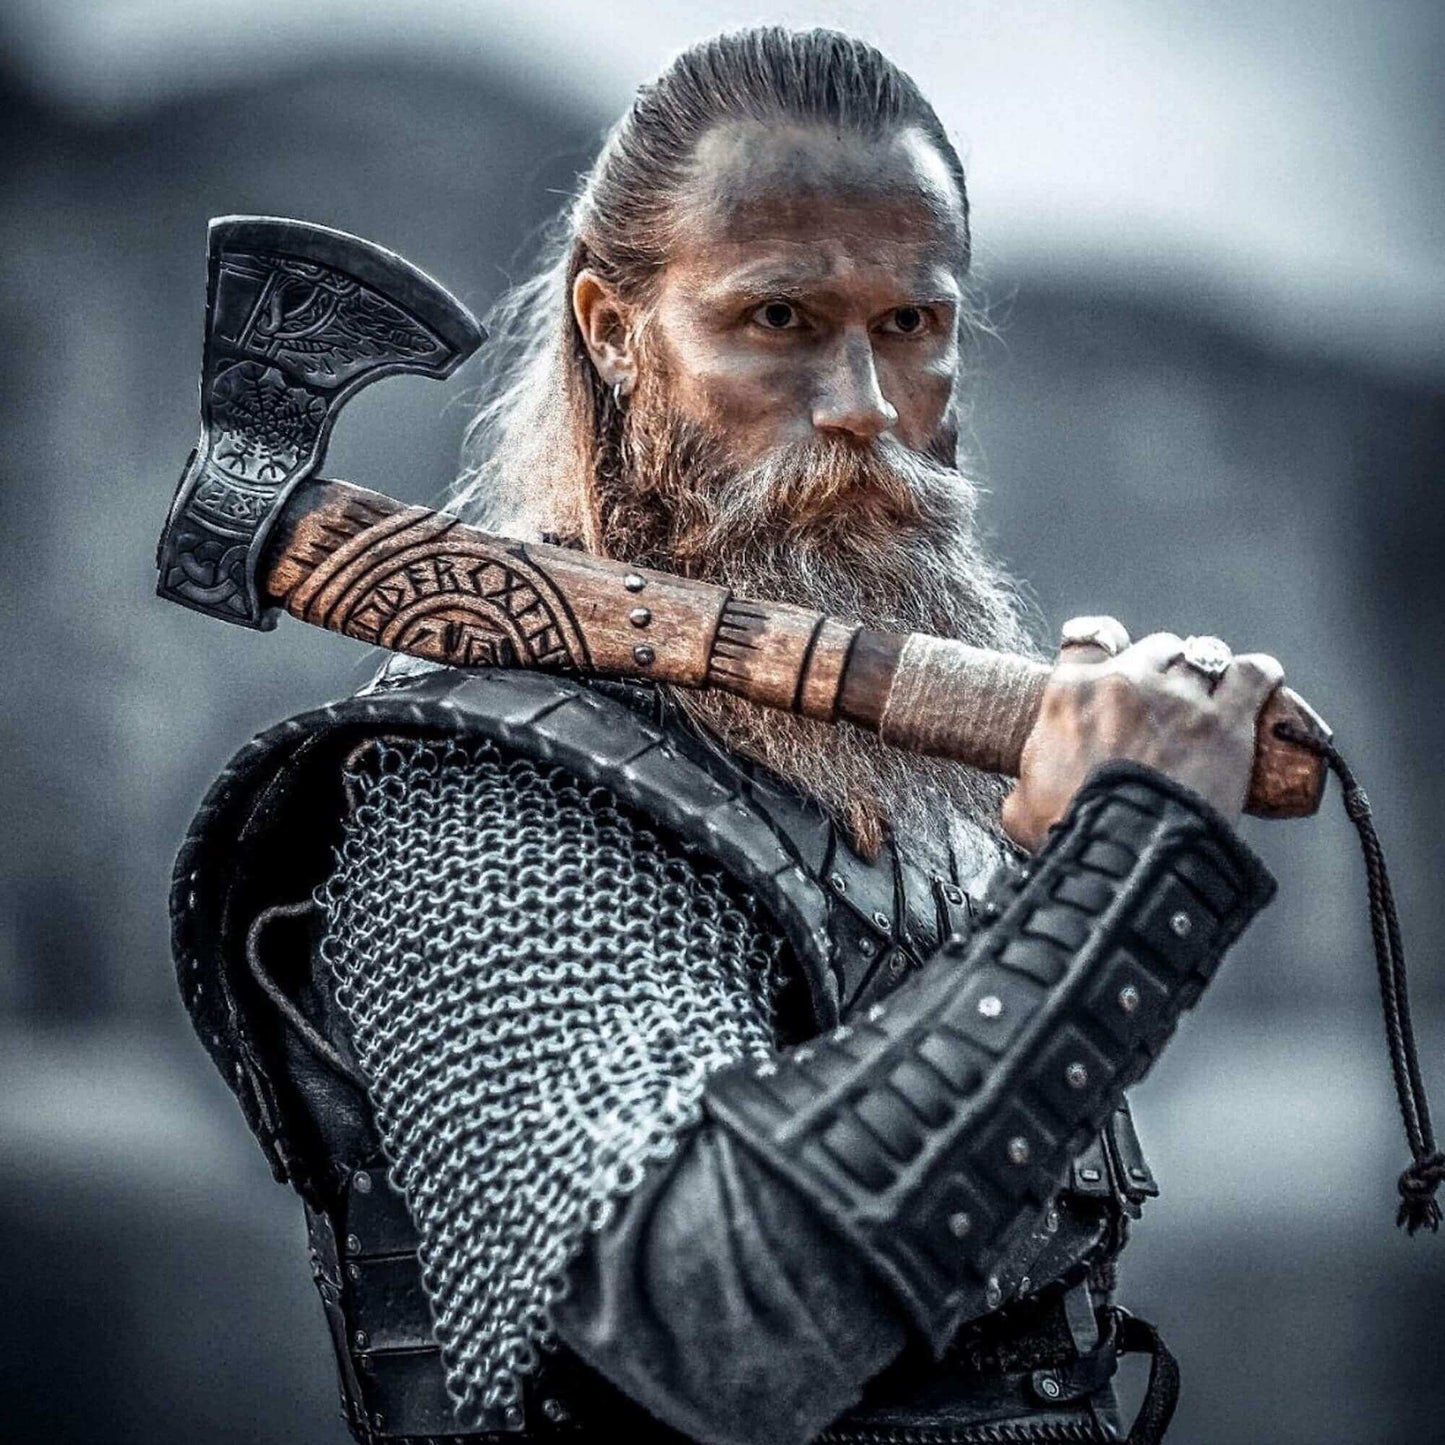 Hache Viking - Ragnar Lothbrok